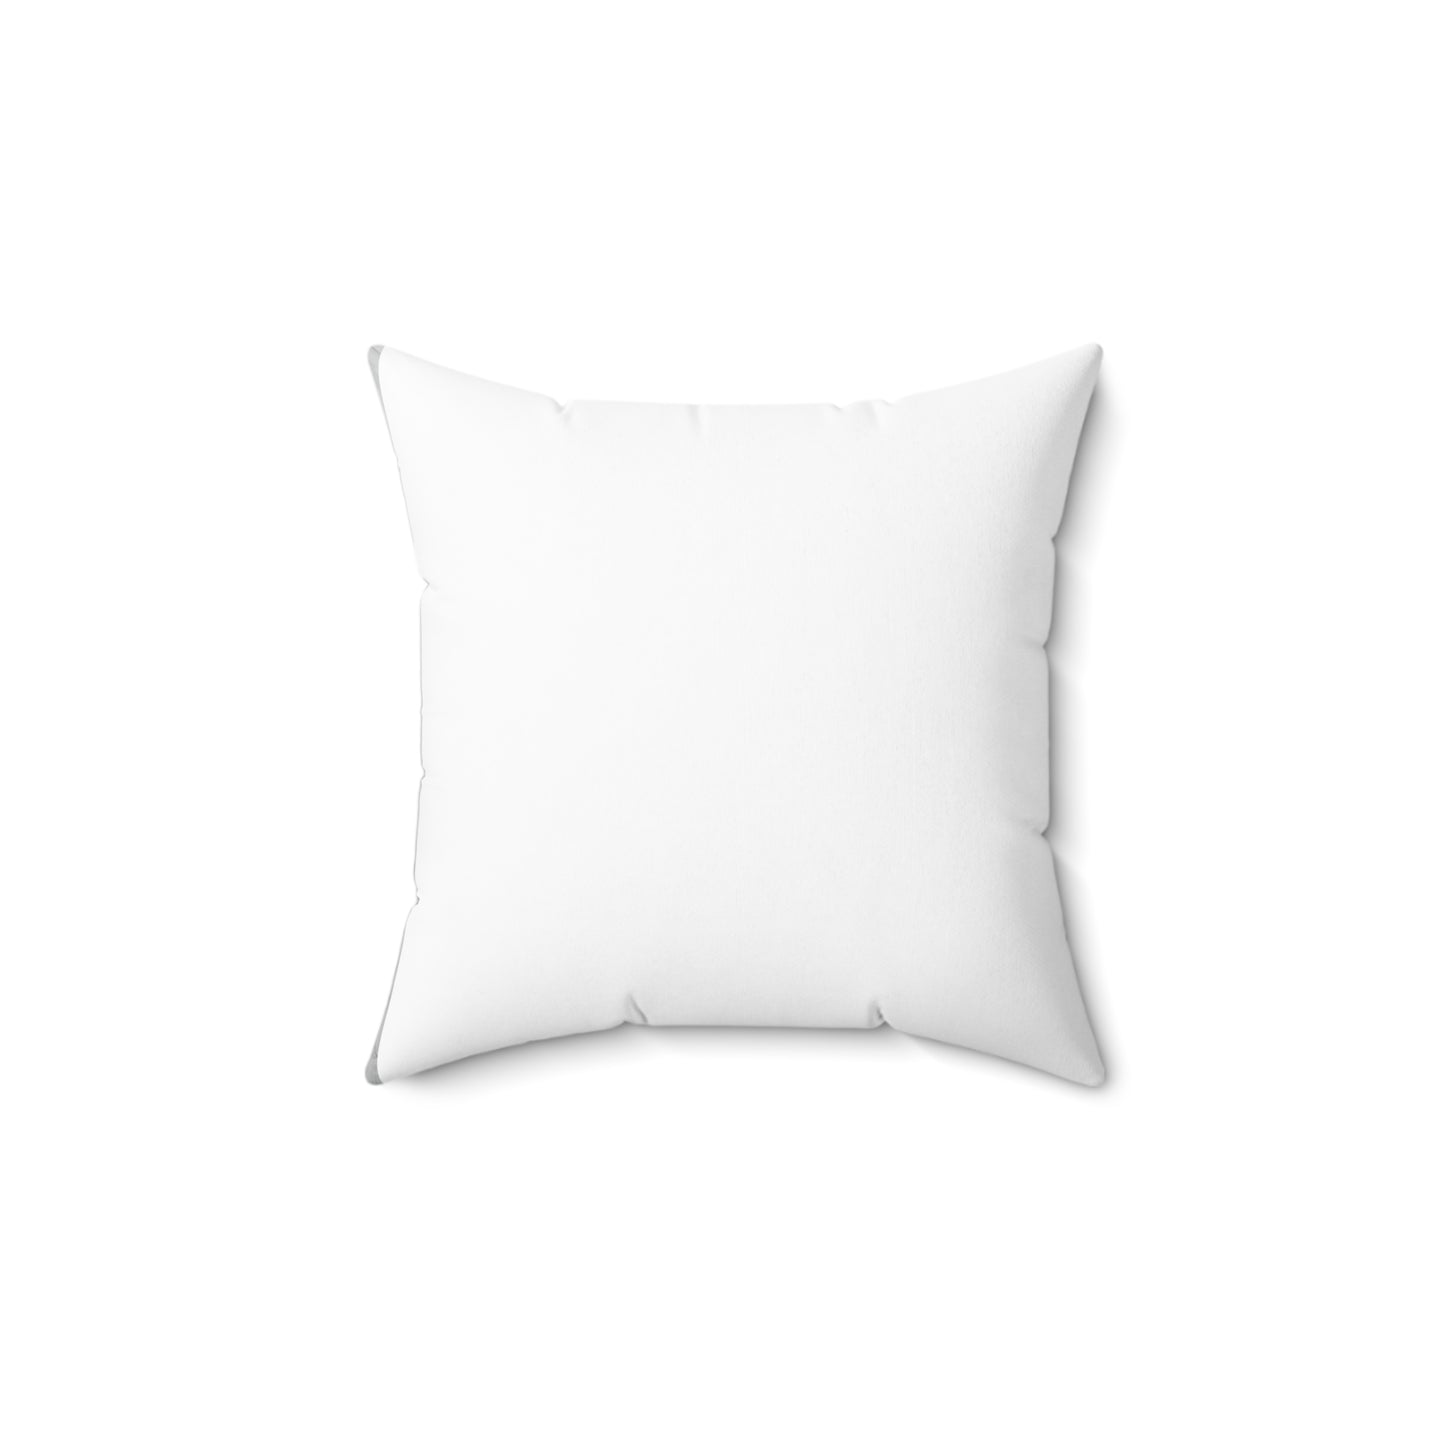 Cat Spun Polyester Square Pillow